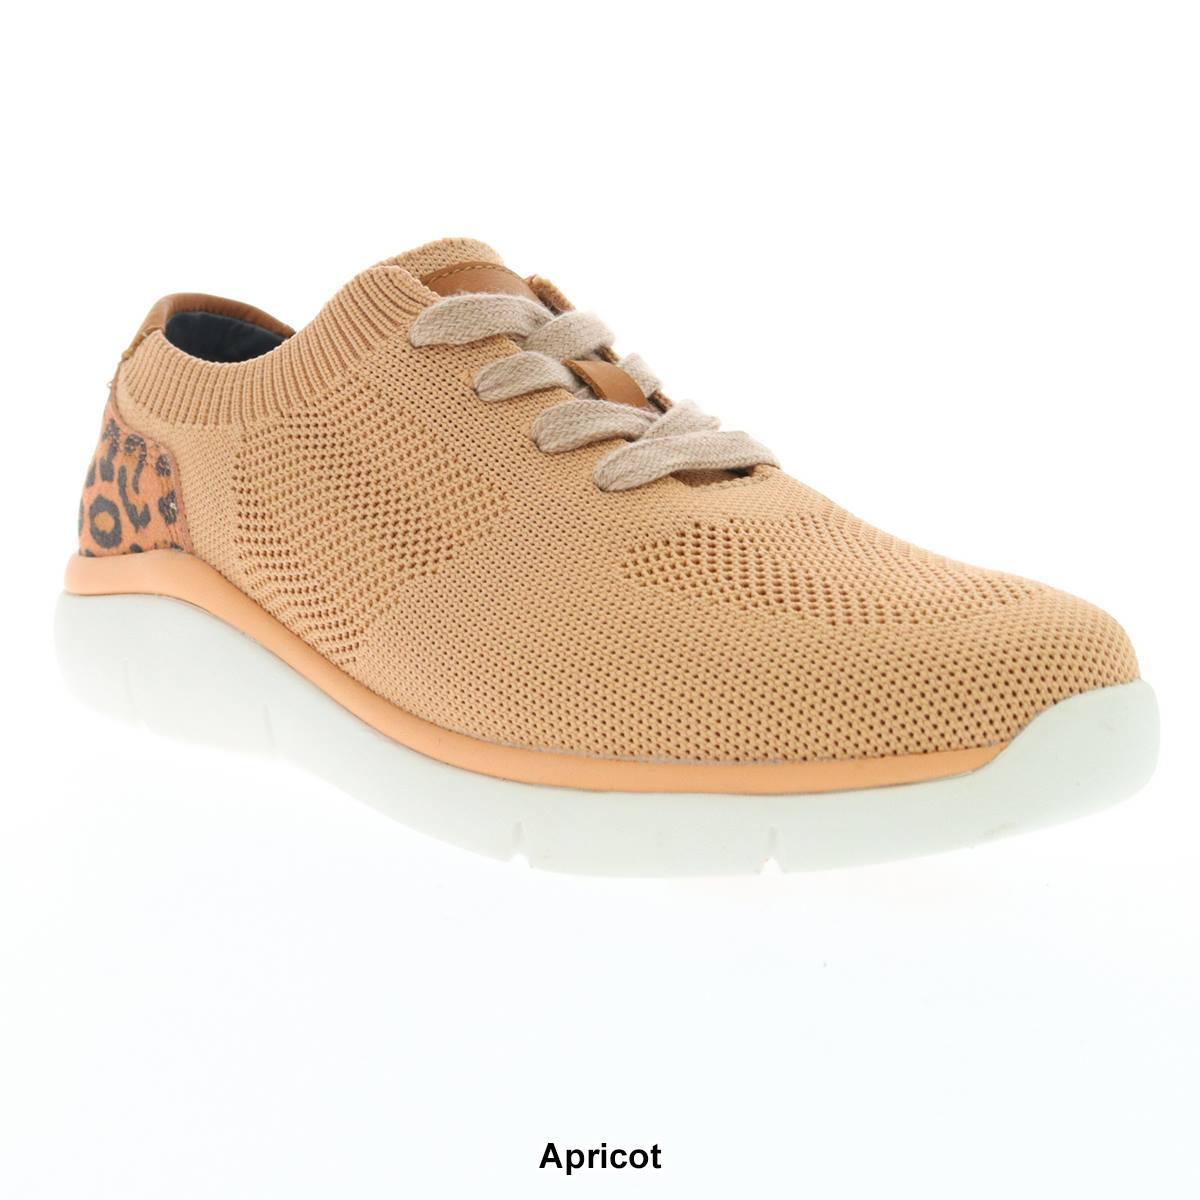 Propt Sachi Slip-On Sneaker Product Image